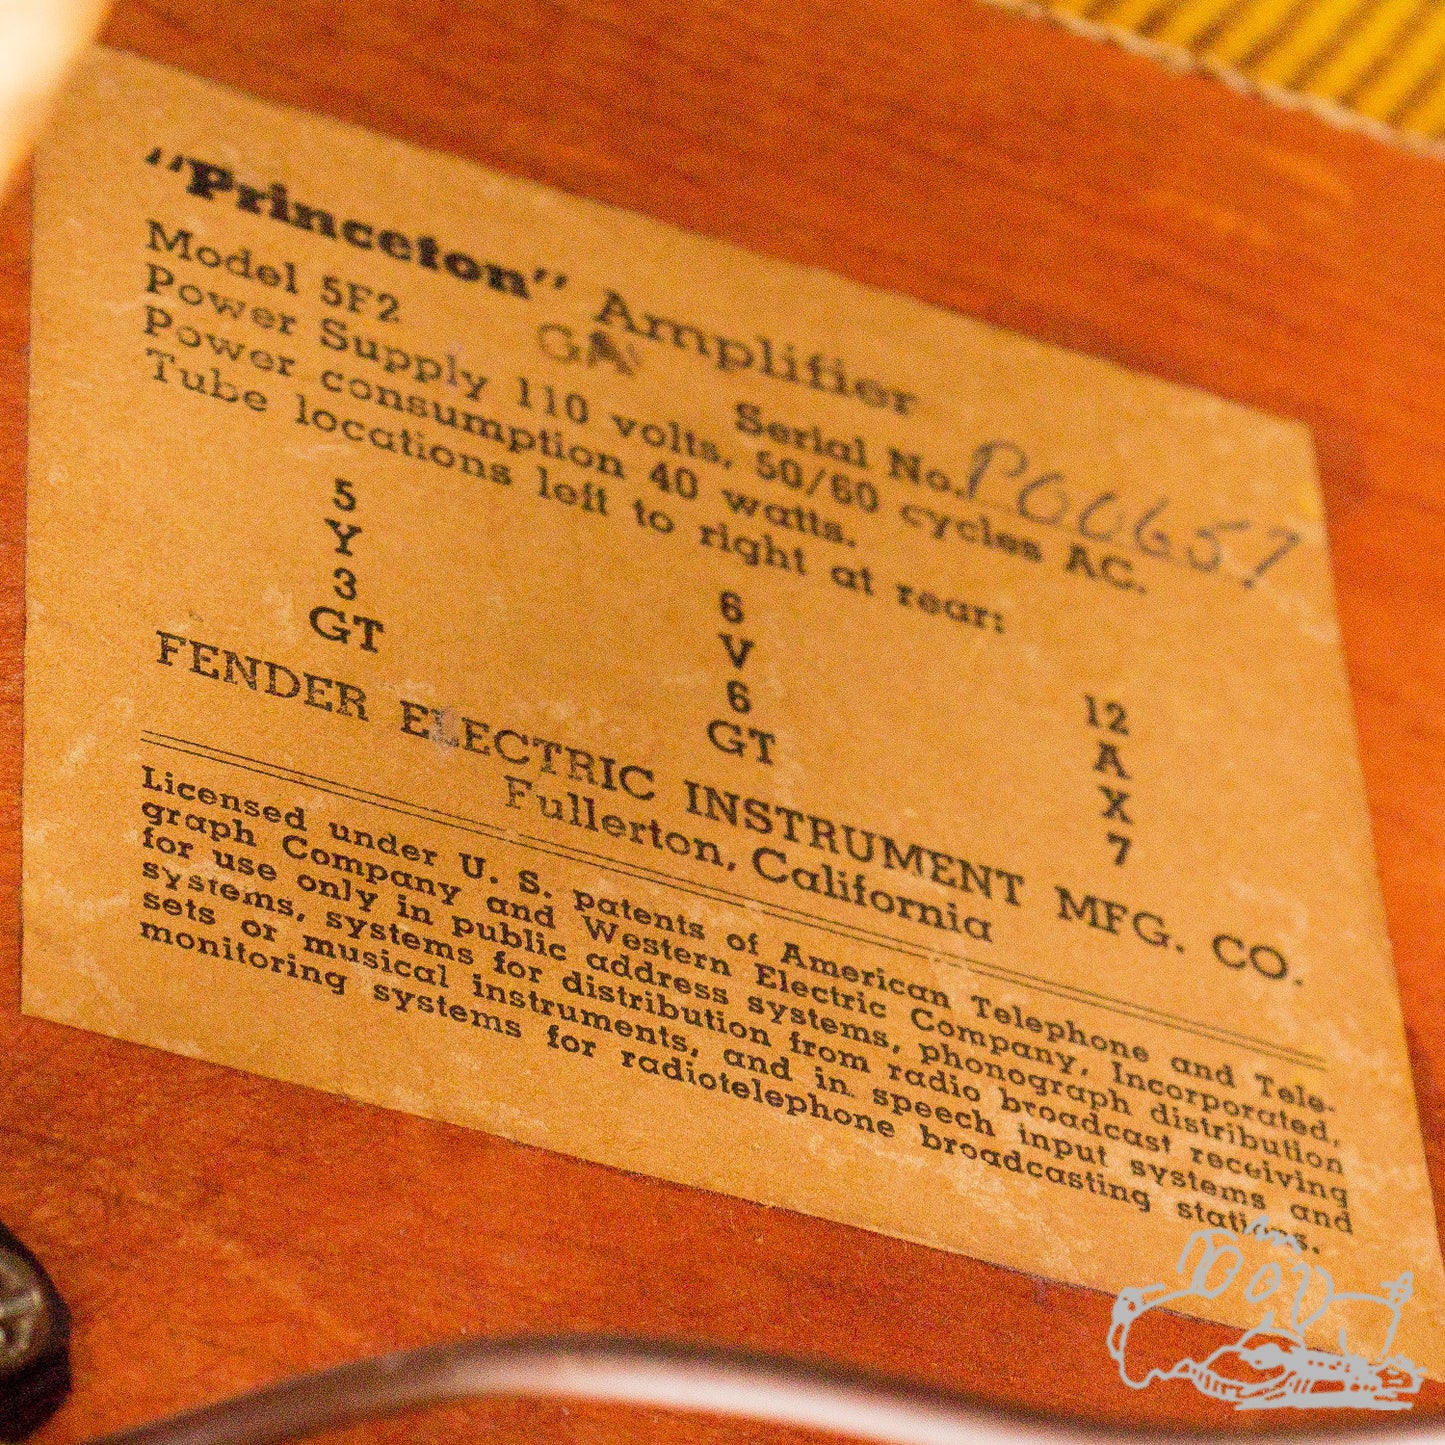 1956 Fender Princeton